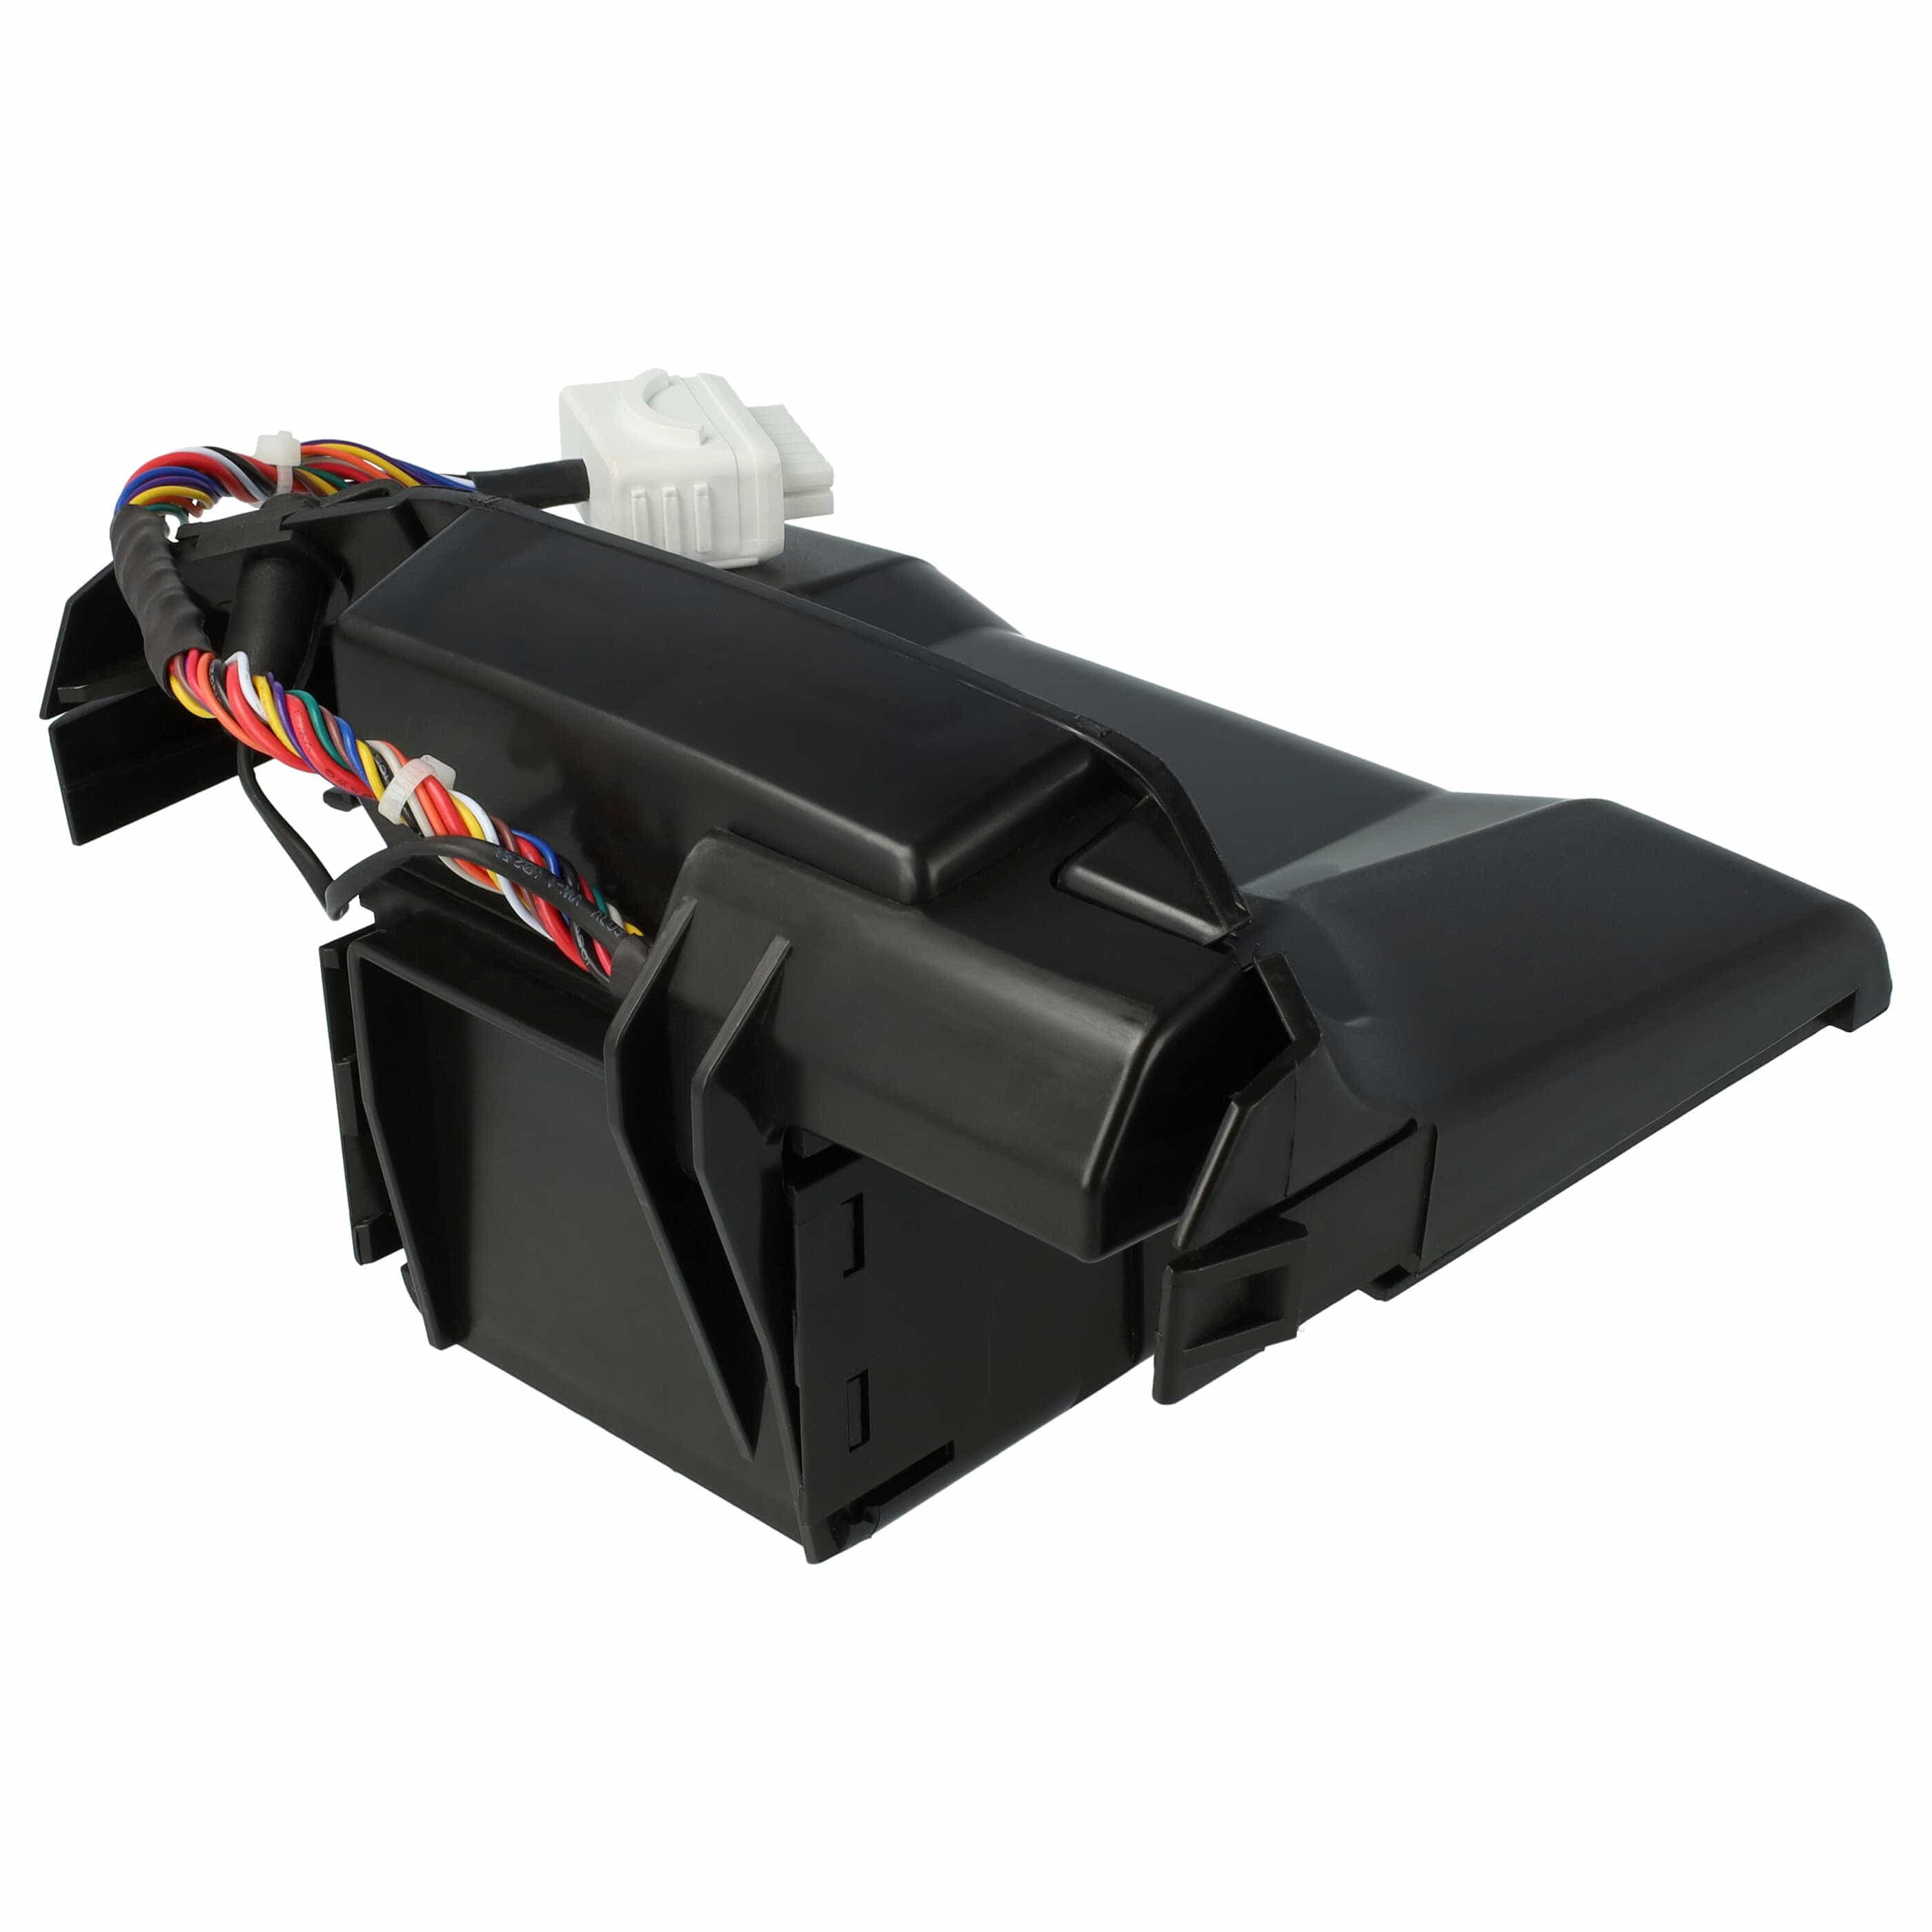 Akumulator do robota koszącego zamiennik Robomow 8IFR27/66, BAT7000B, BAT7001A - 4000 mAh 25,6 V Li-Ion